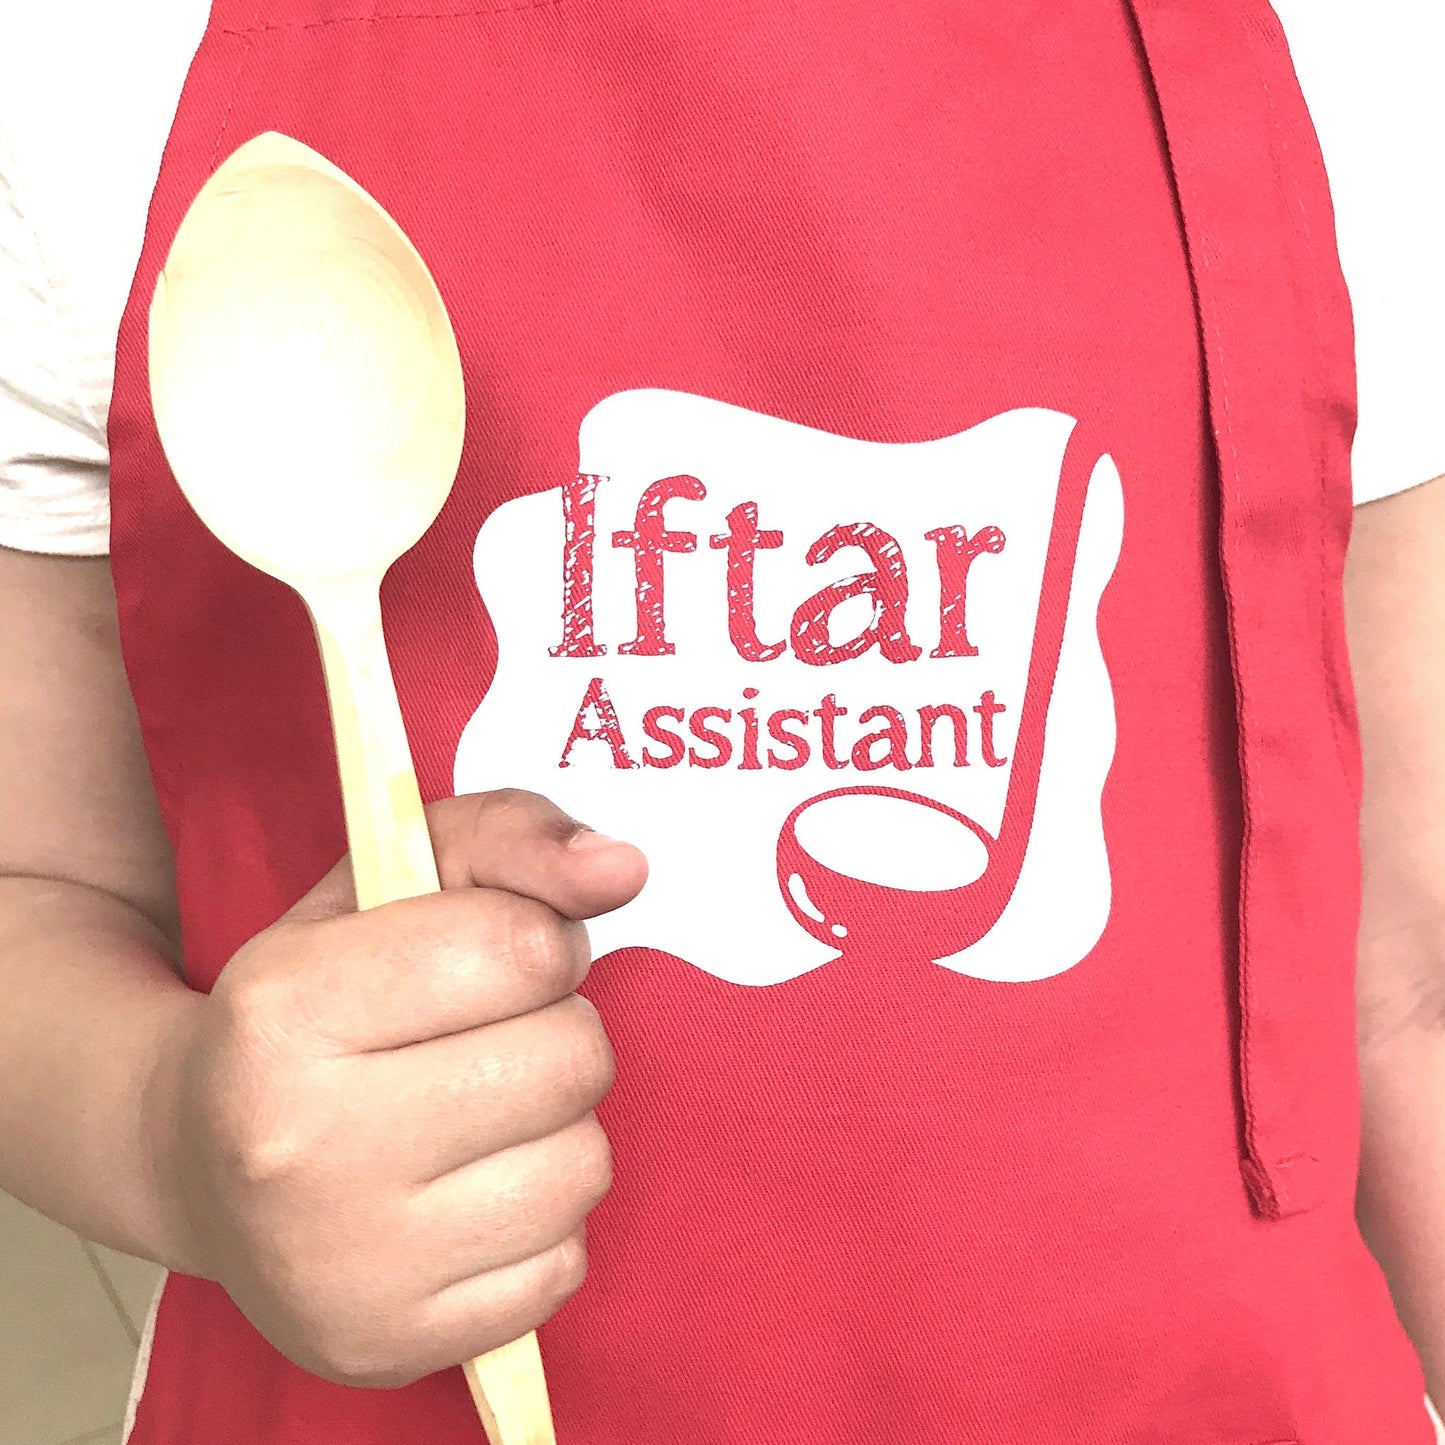 Iftar Assistant Apron